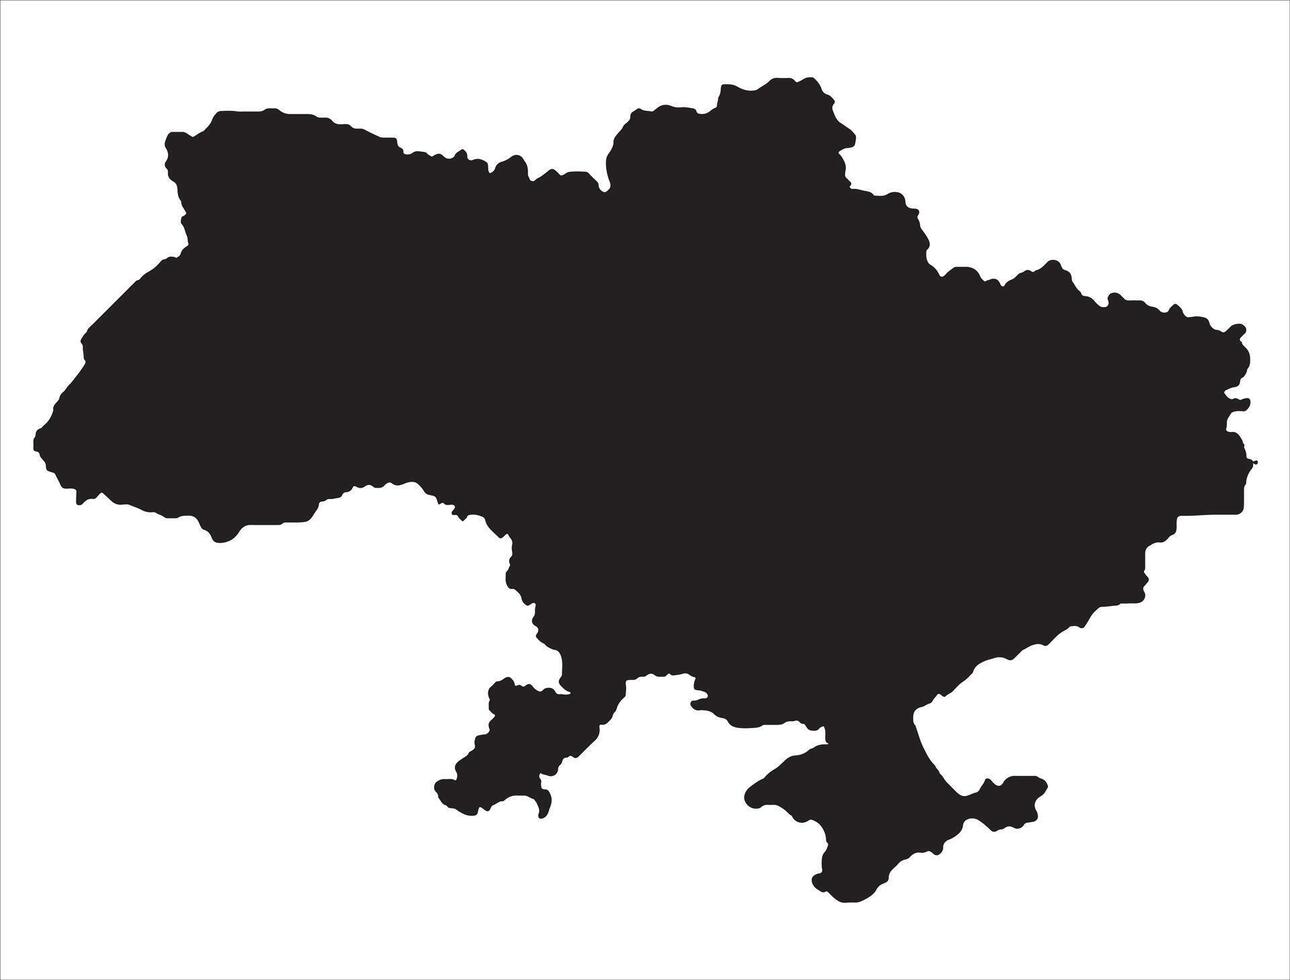 Ukraine map silhouette on white background vector